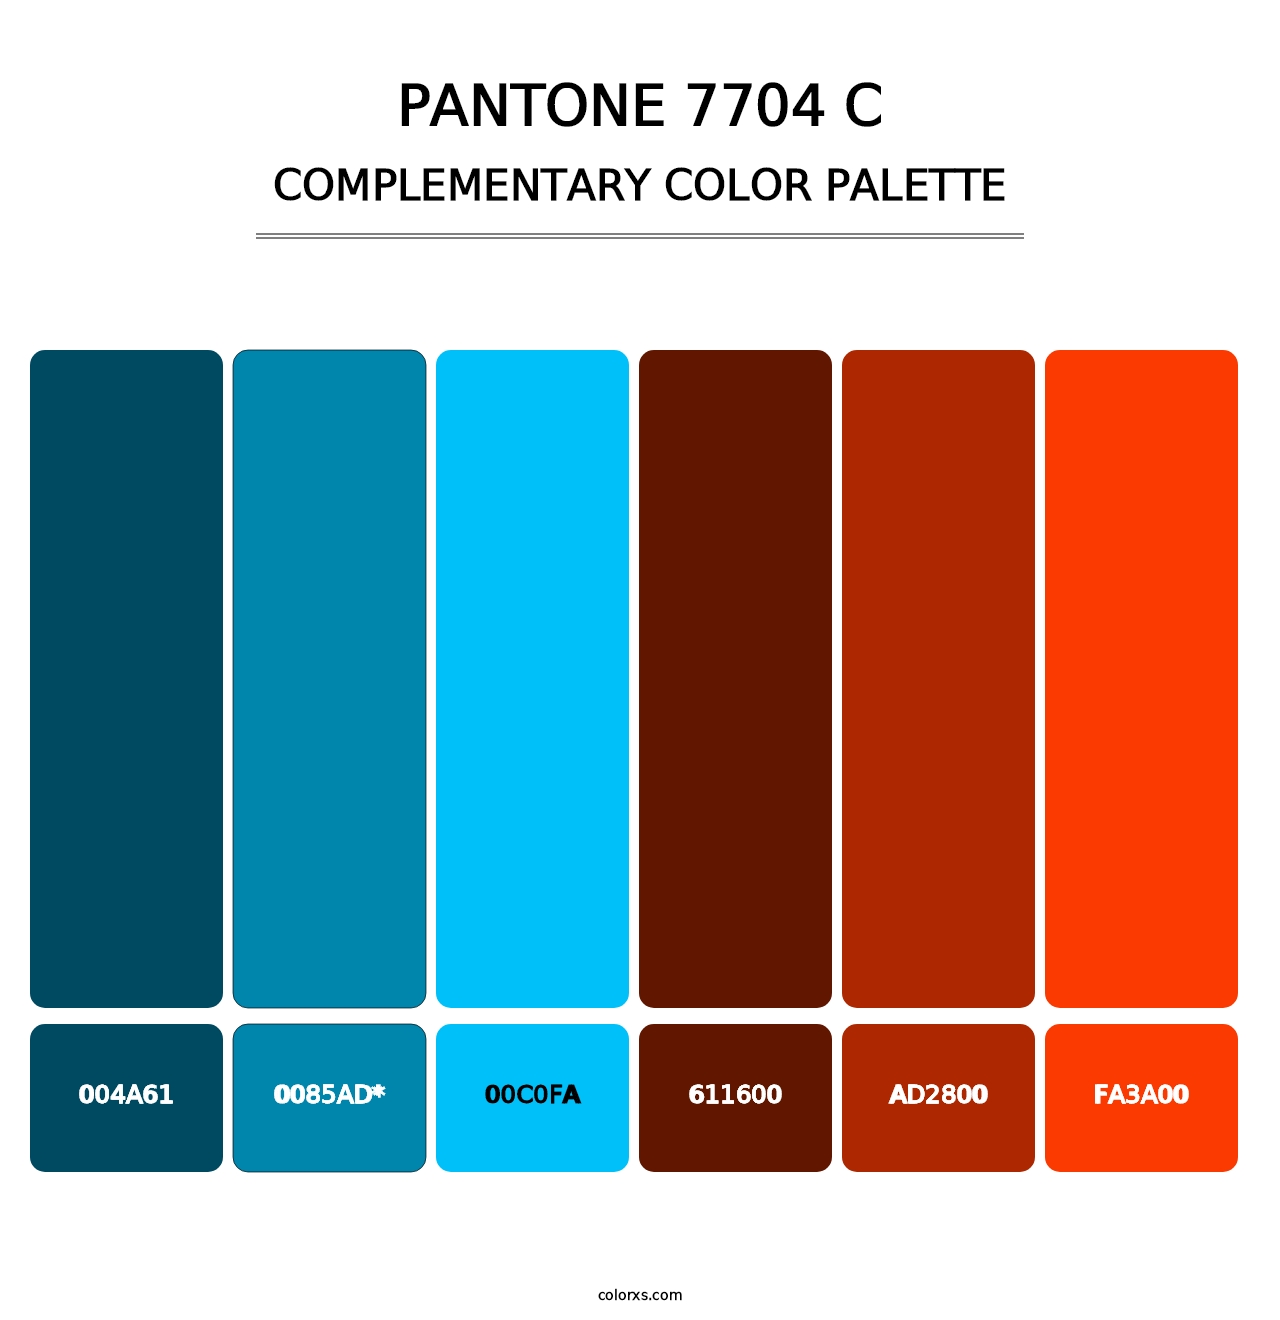 PANTONE 7704 C - Complementary Color Palette